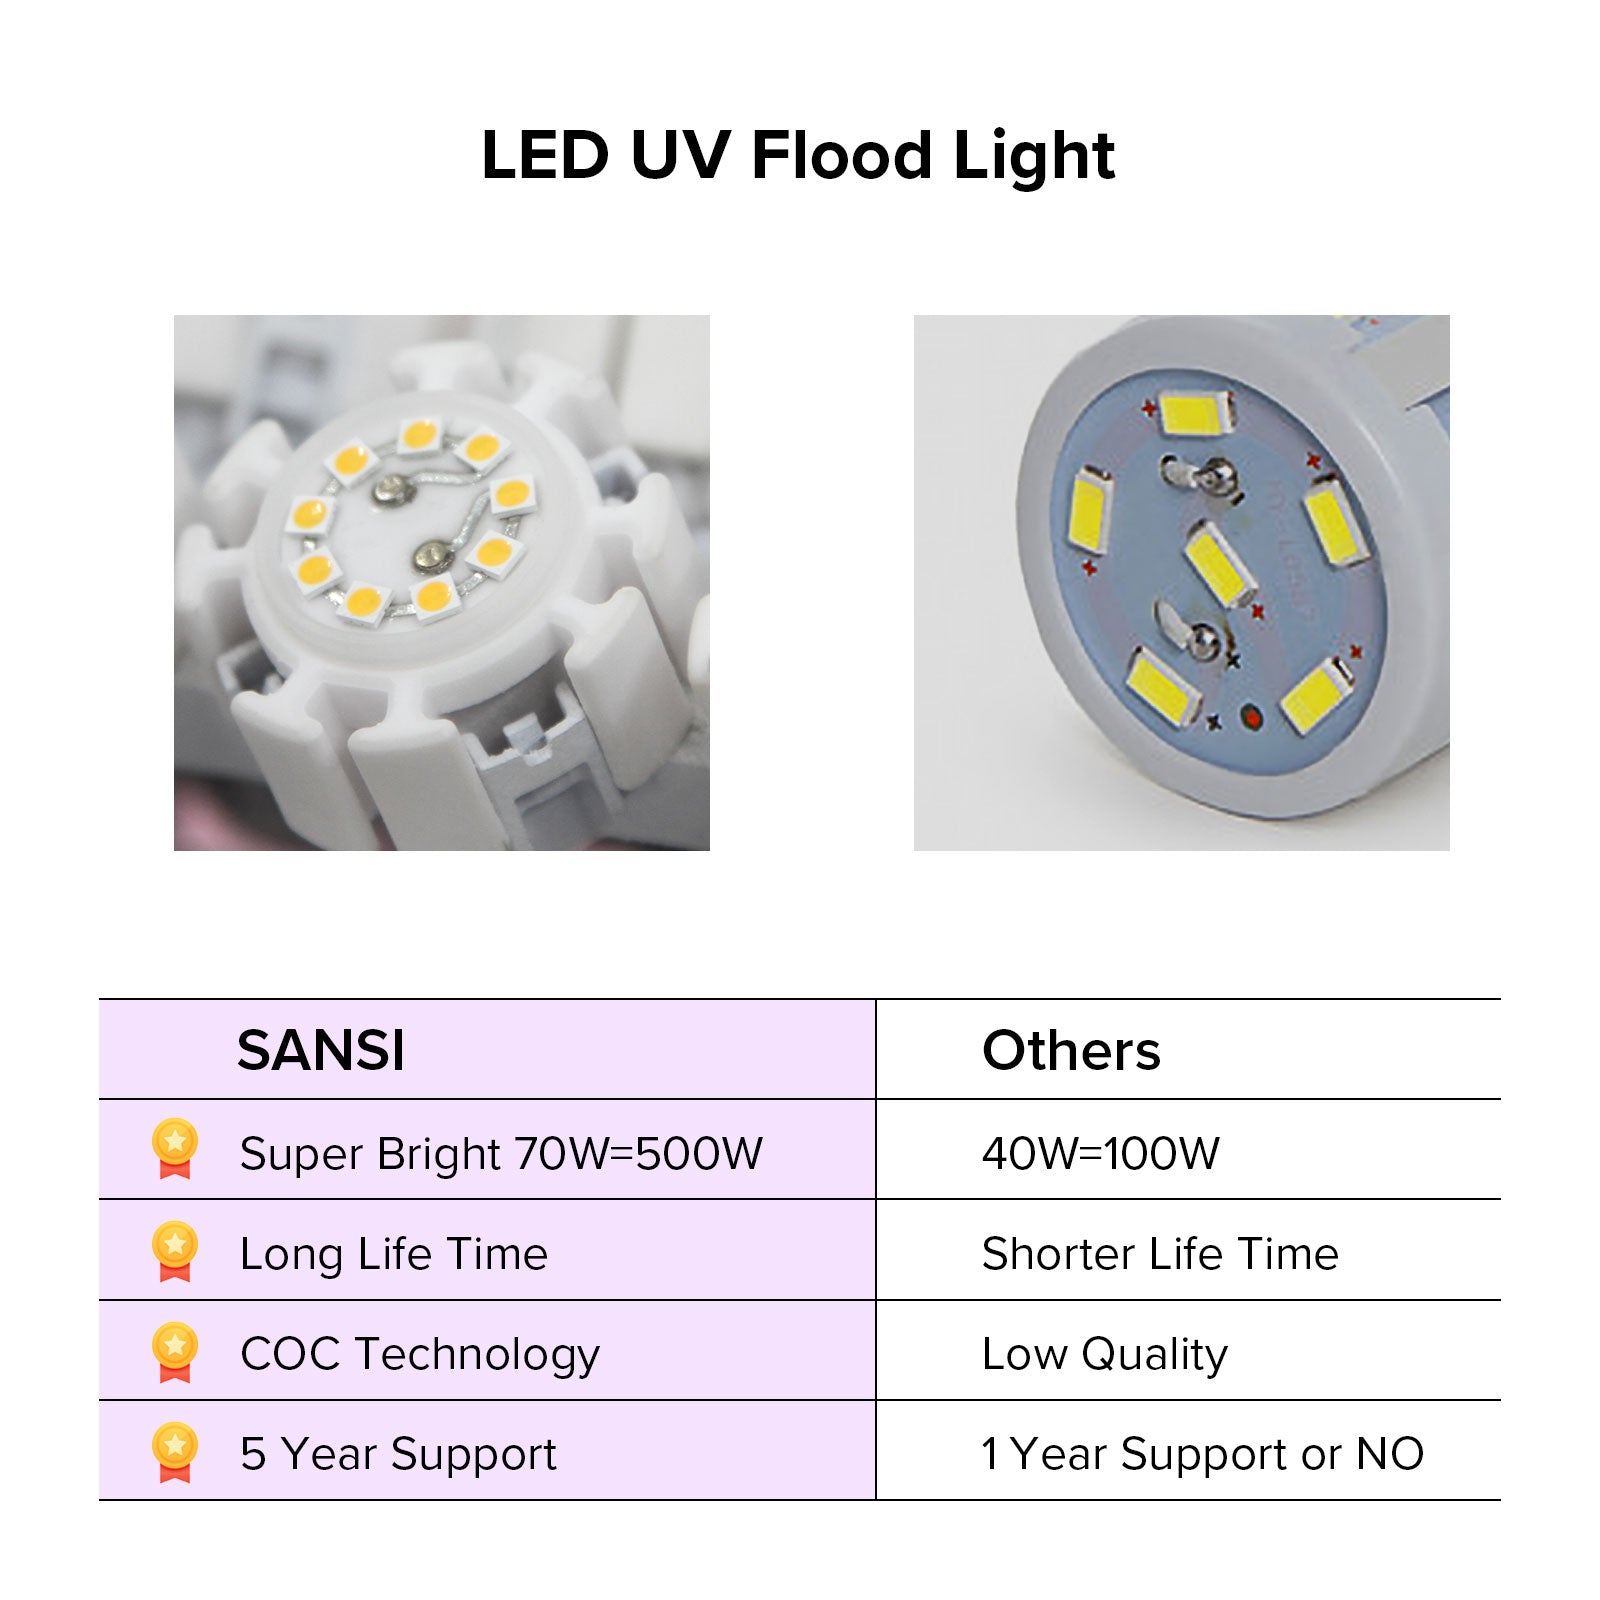 70W LED Black Light with led UV flood light, super bright 70W, long life time, COC technology, 5-year warranty